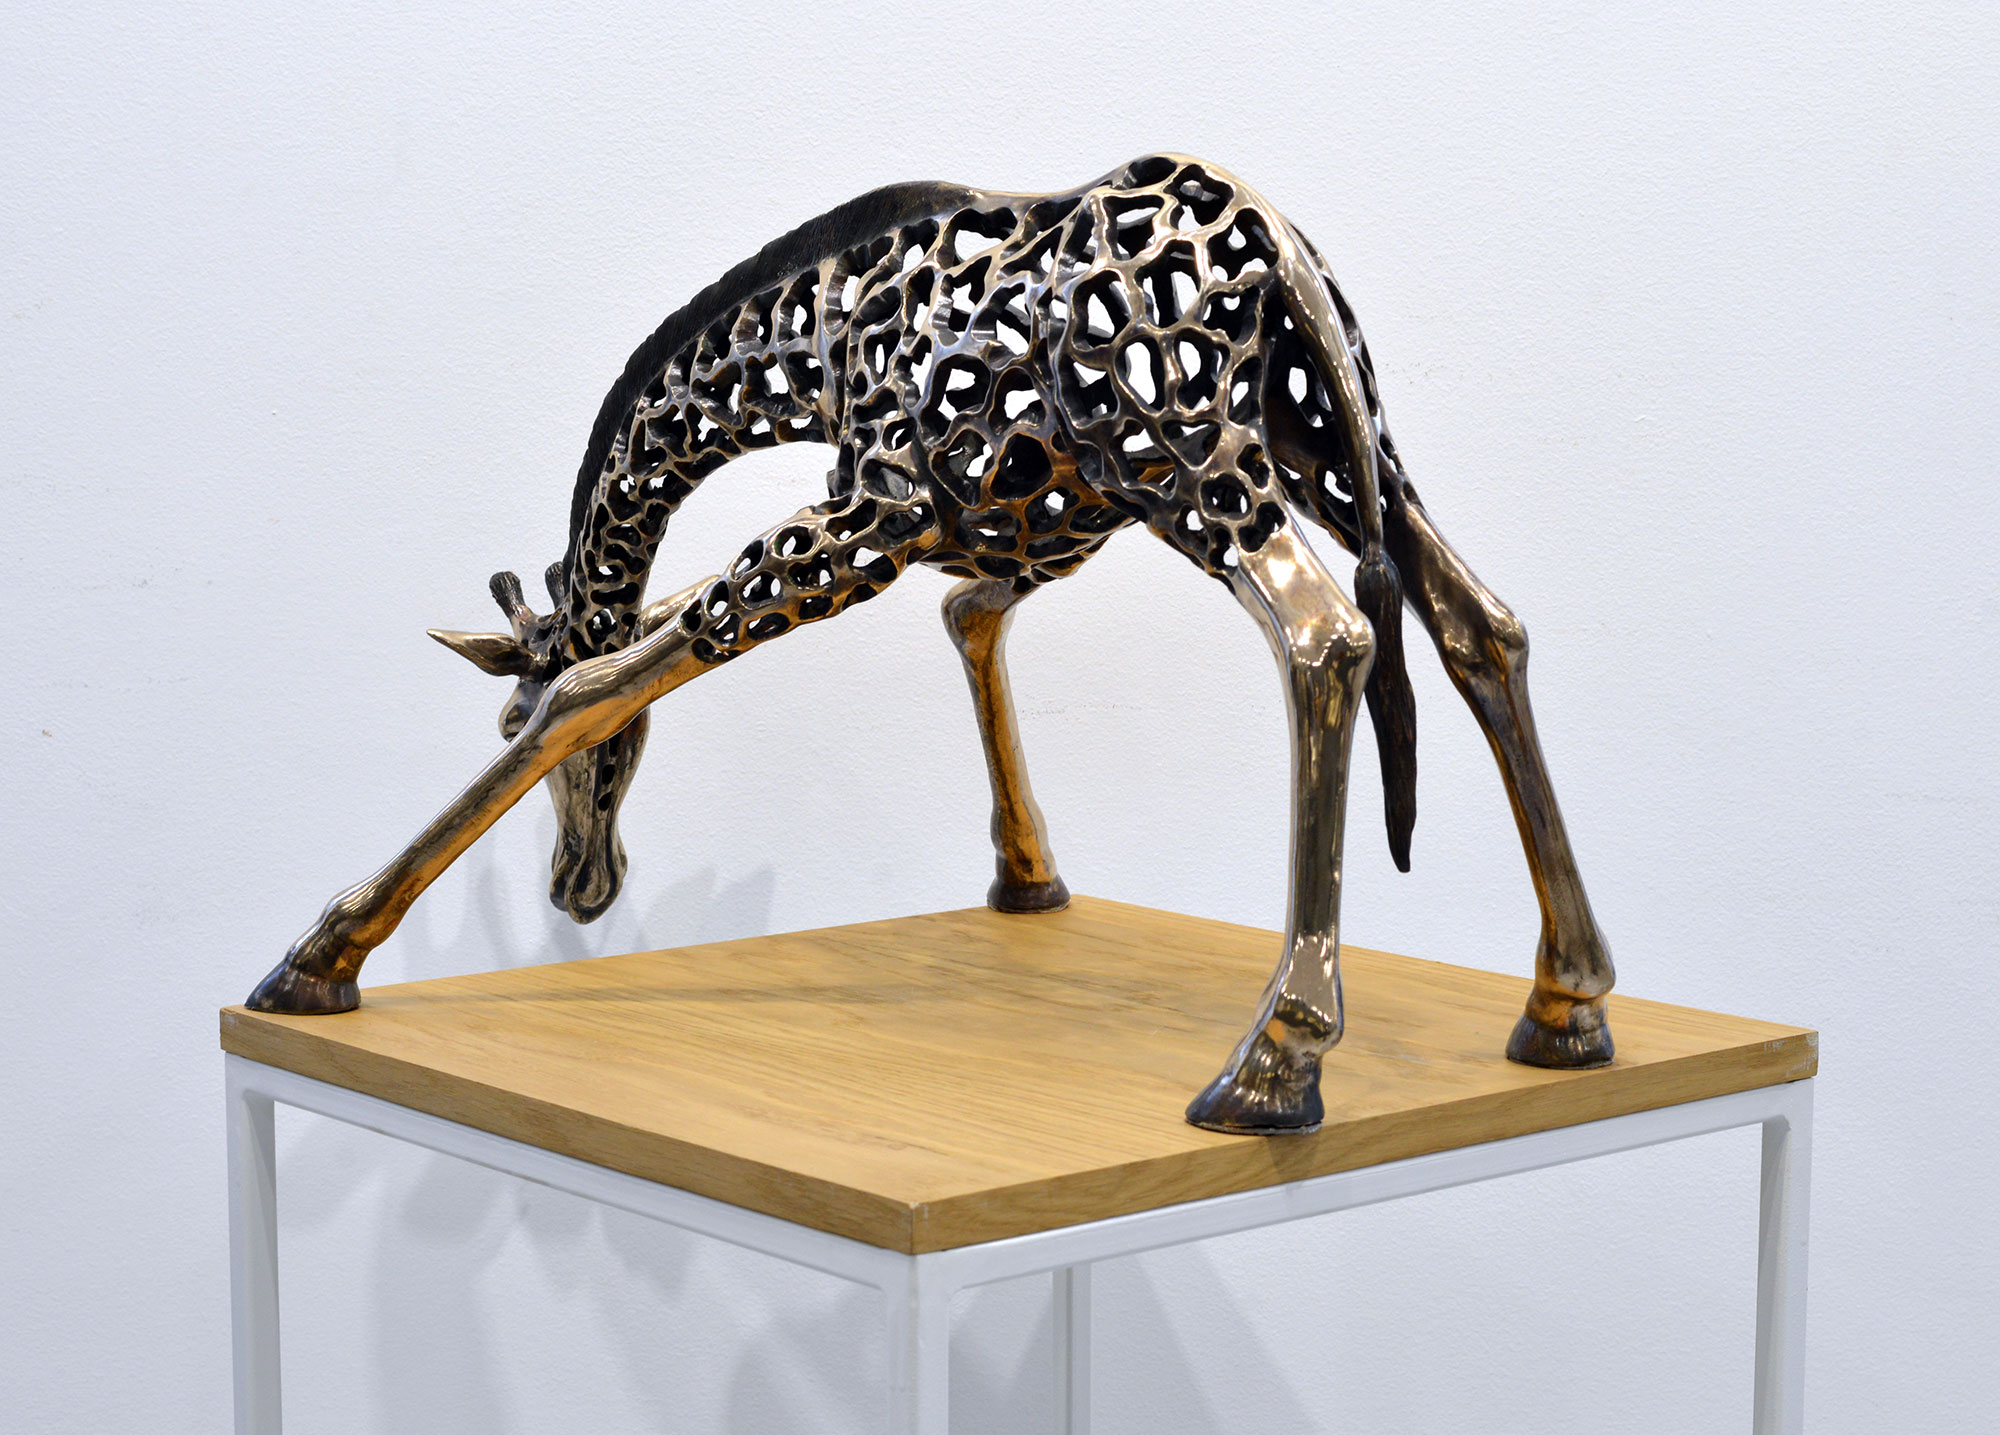 "Giraffe", 2000 - 1